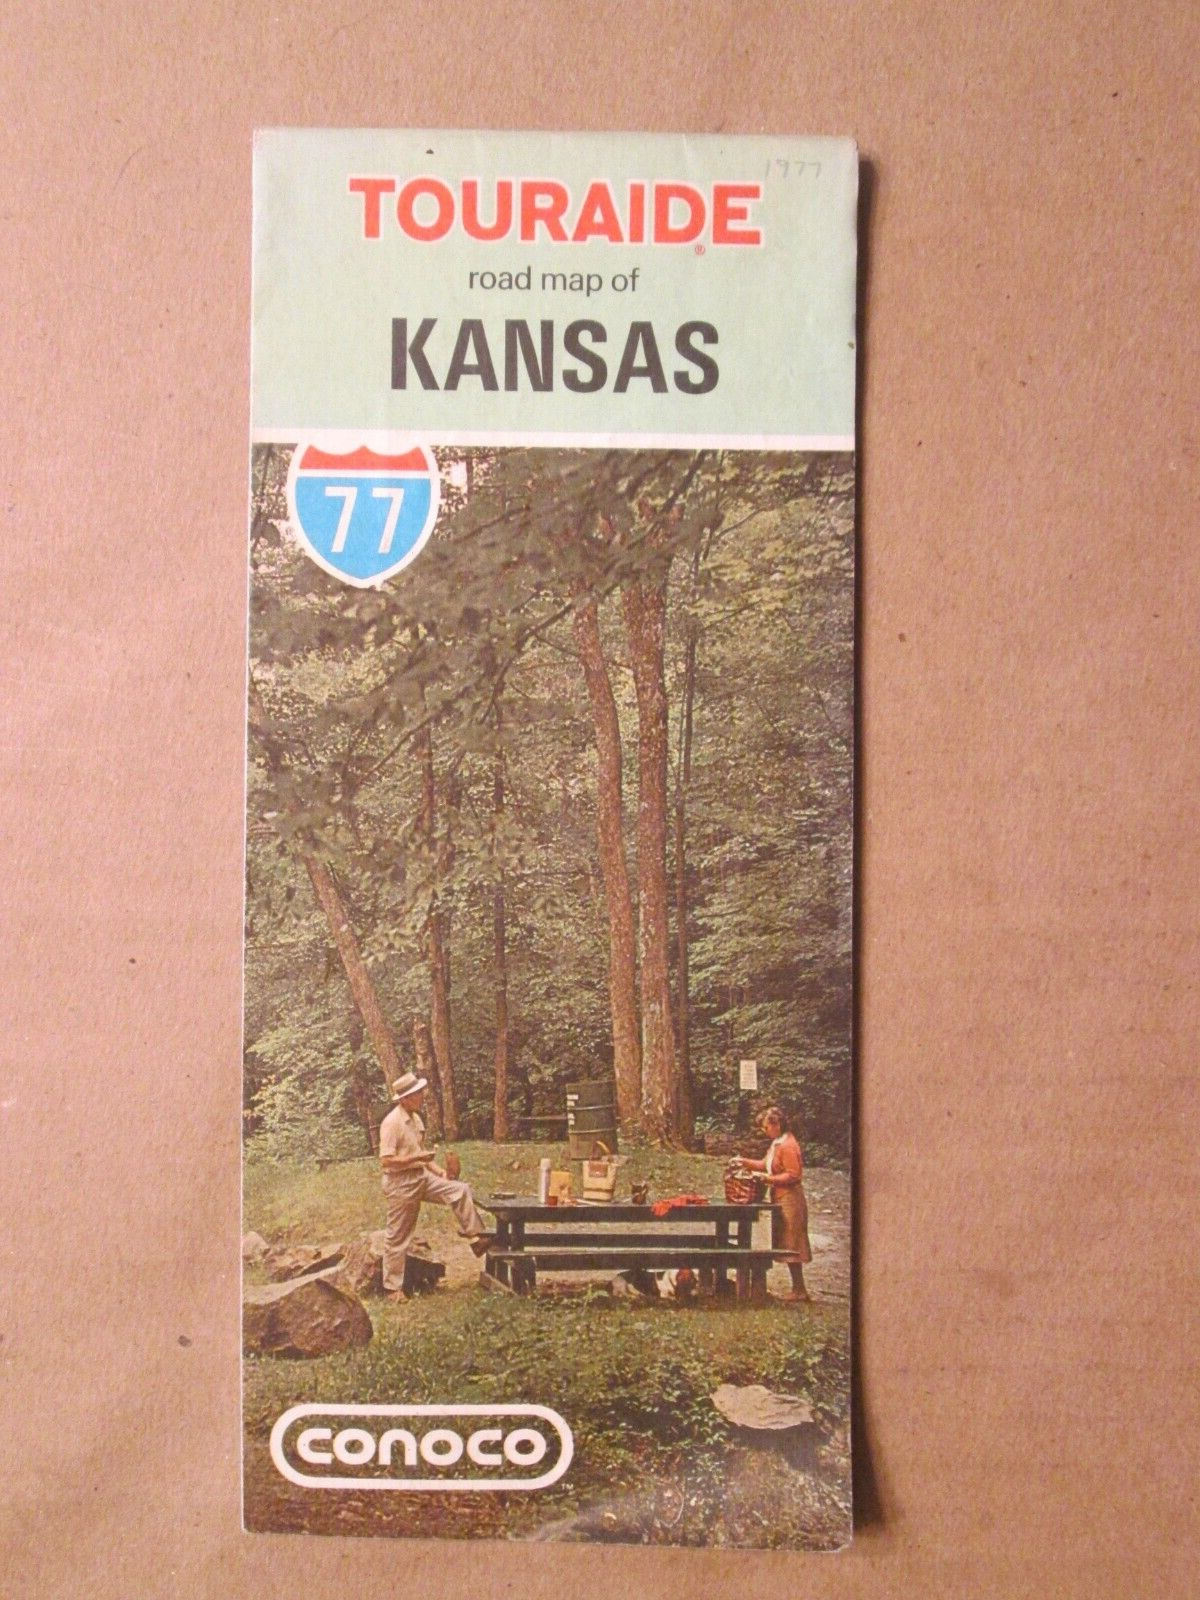 Conoco Highway Road Map of Kansas 1977